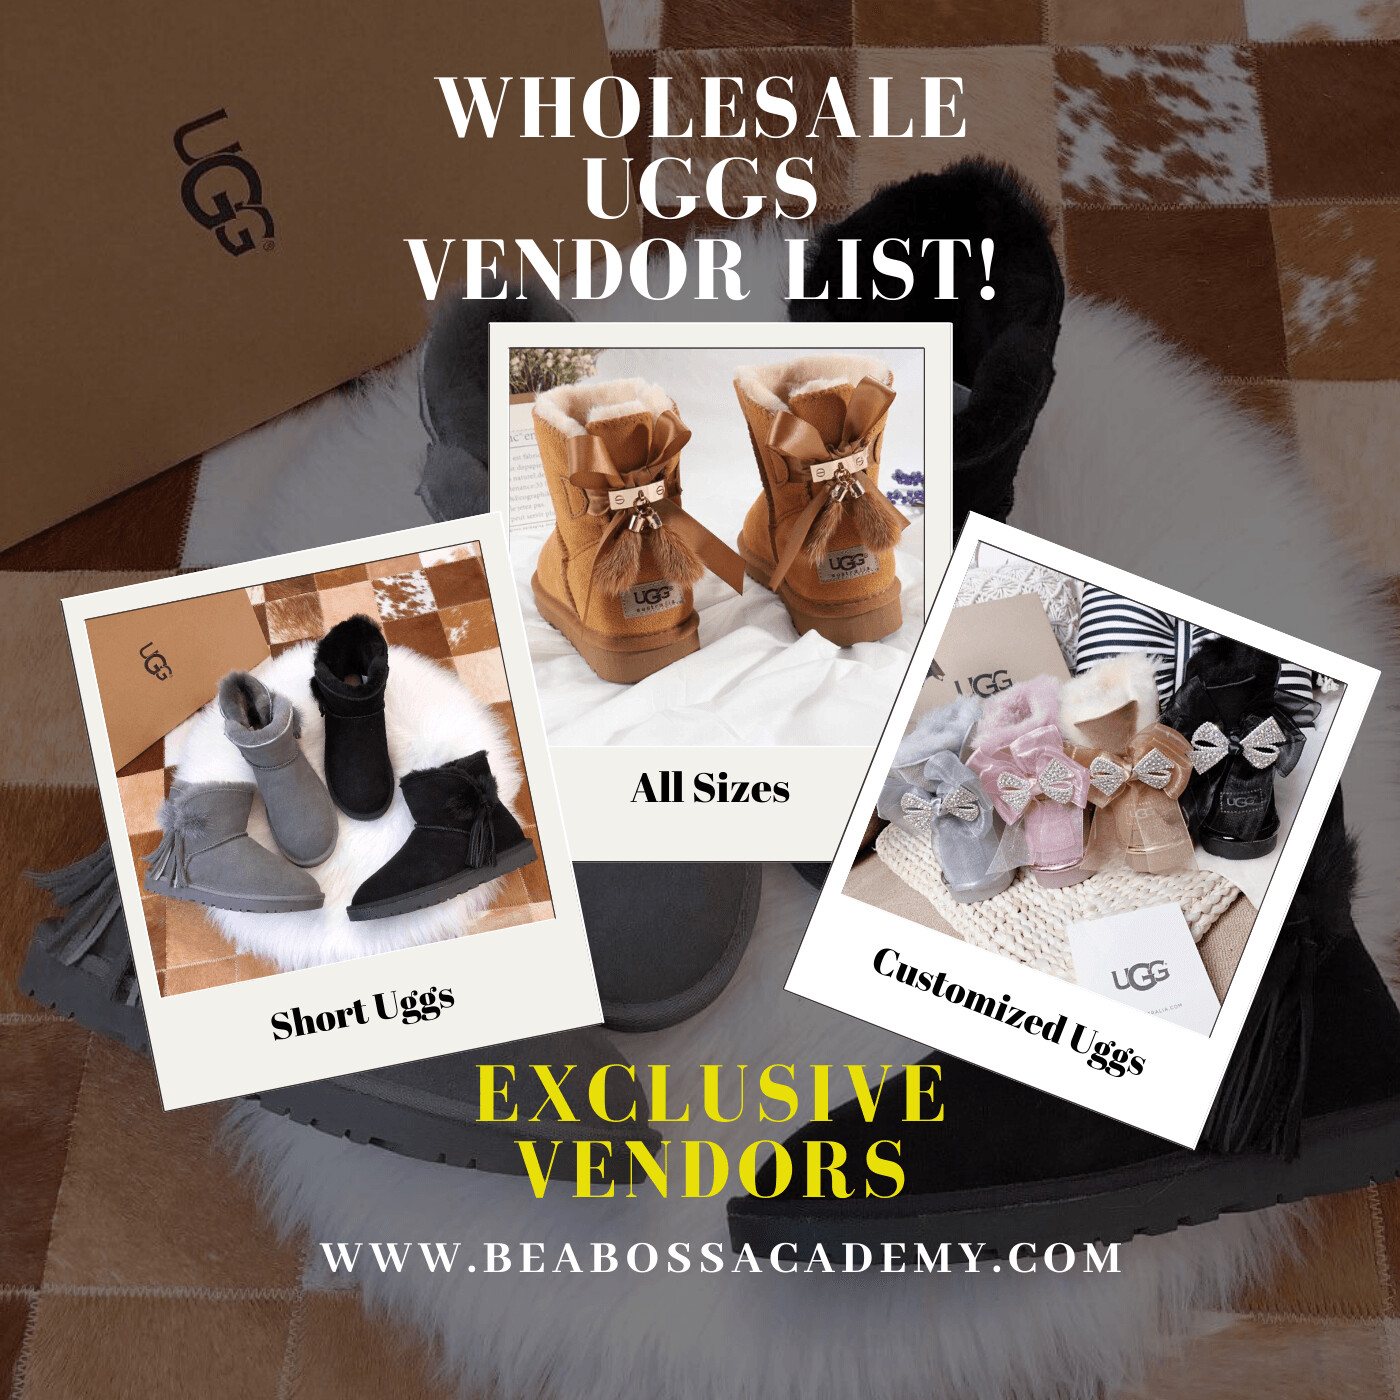 Wholesale Uggs Vendor List!